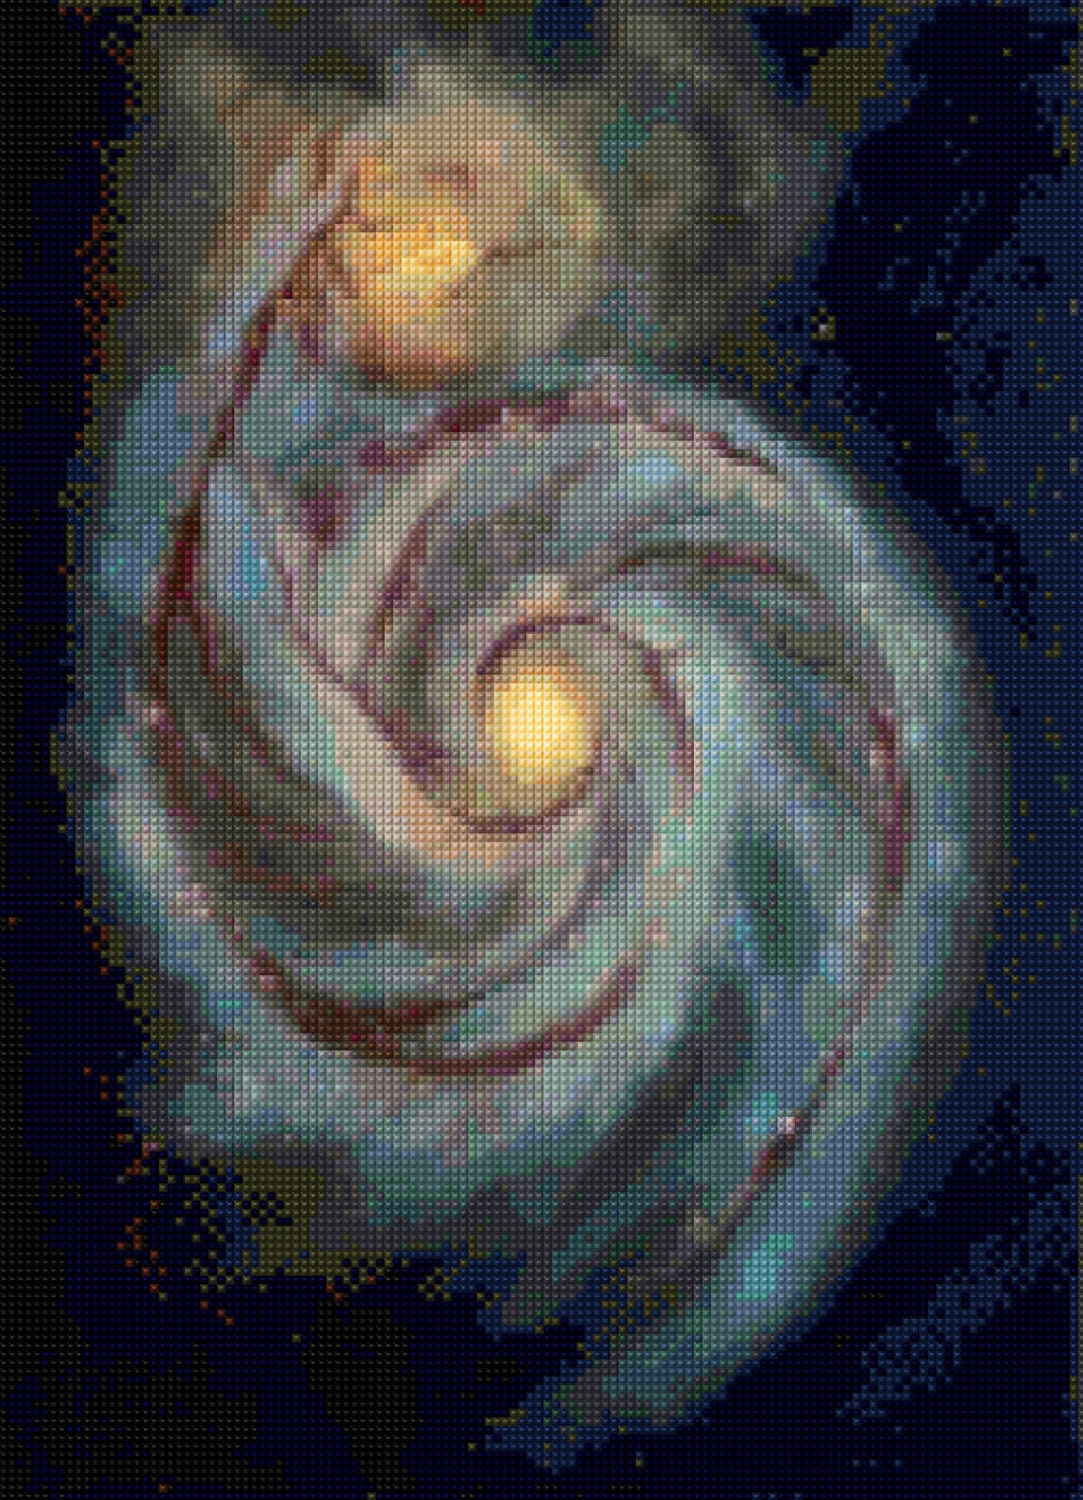 whirlpool galaxy cross